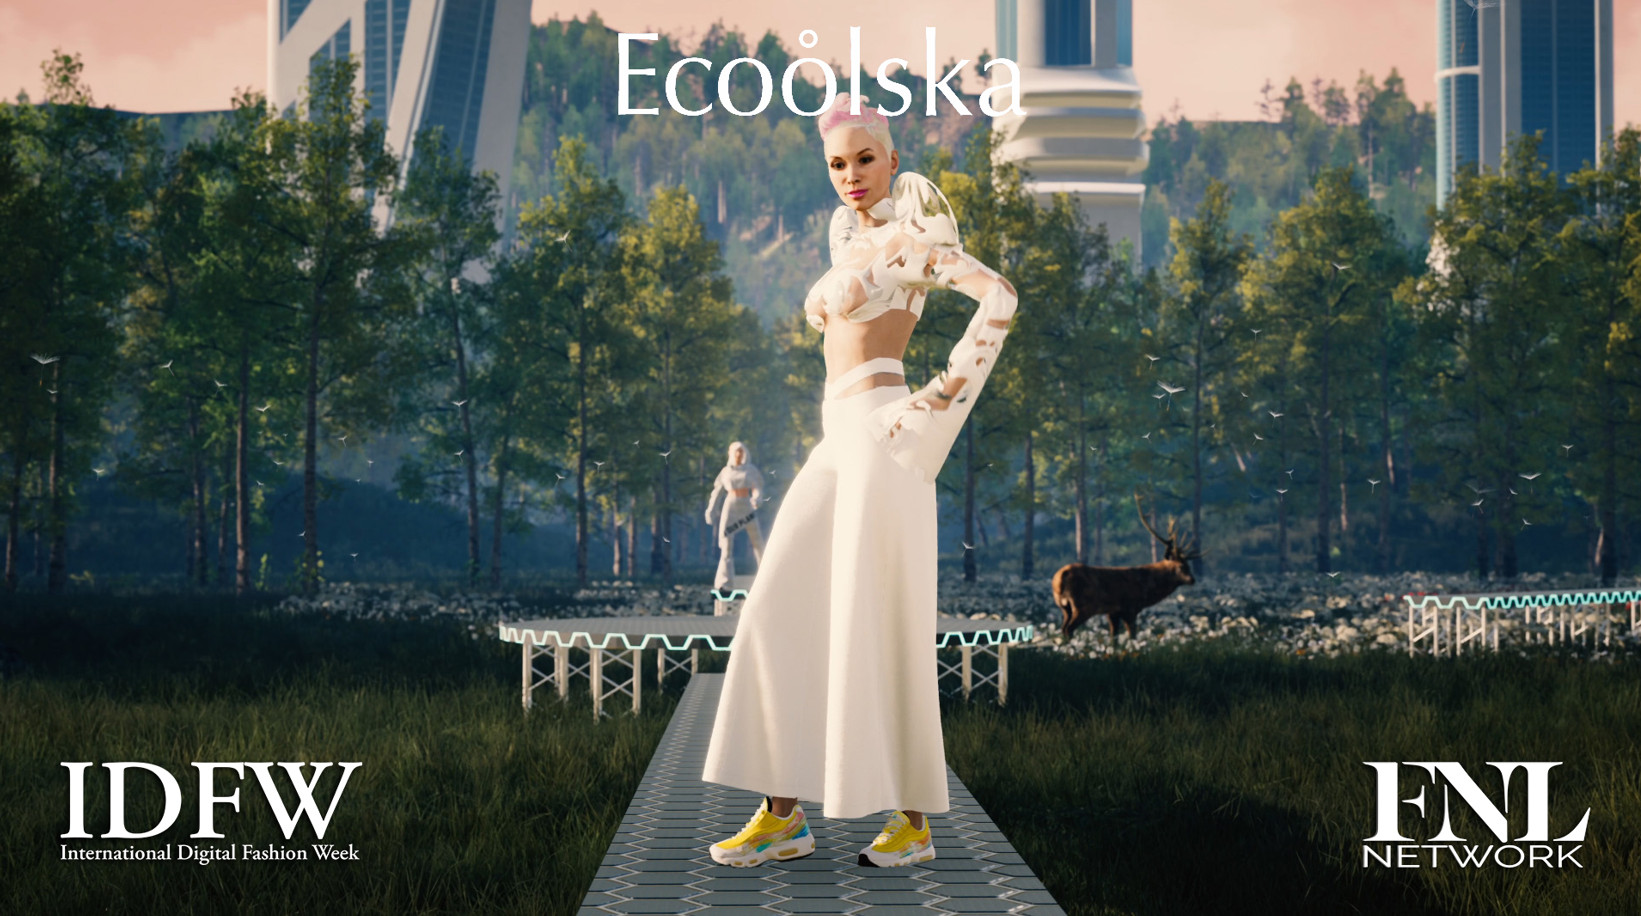 Advancing fashion’s future ecoolska’s digital fashion collection (2)